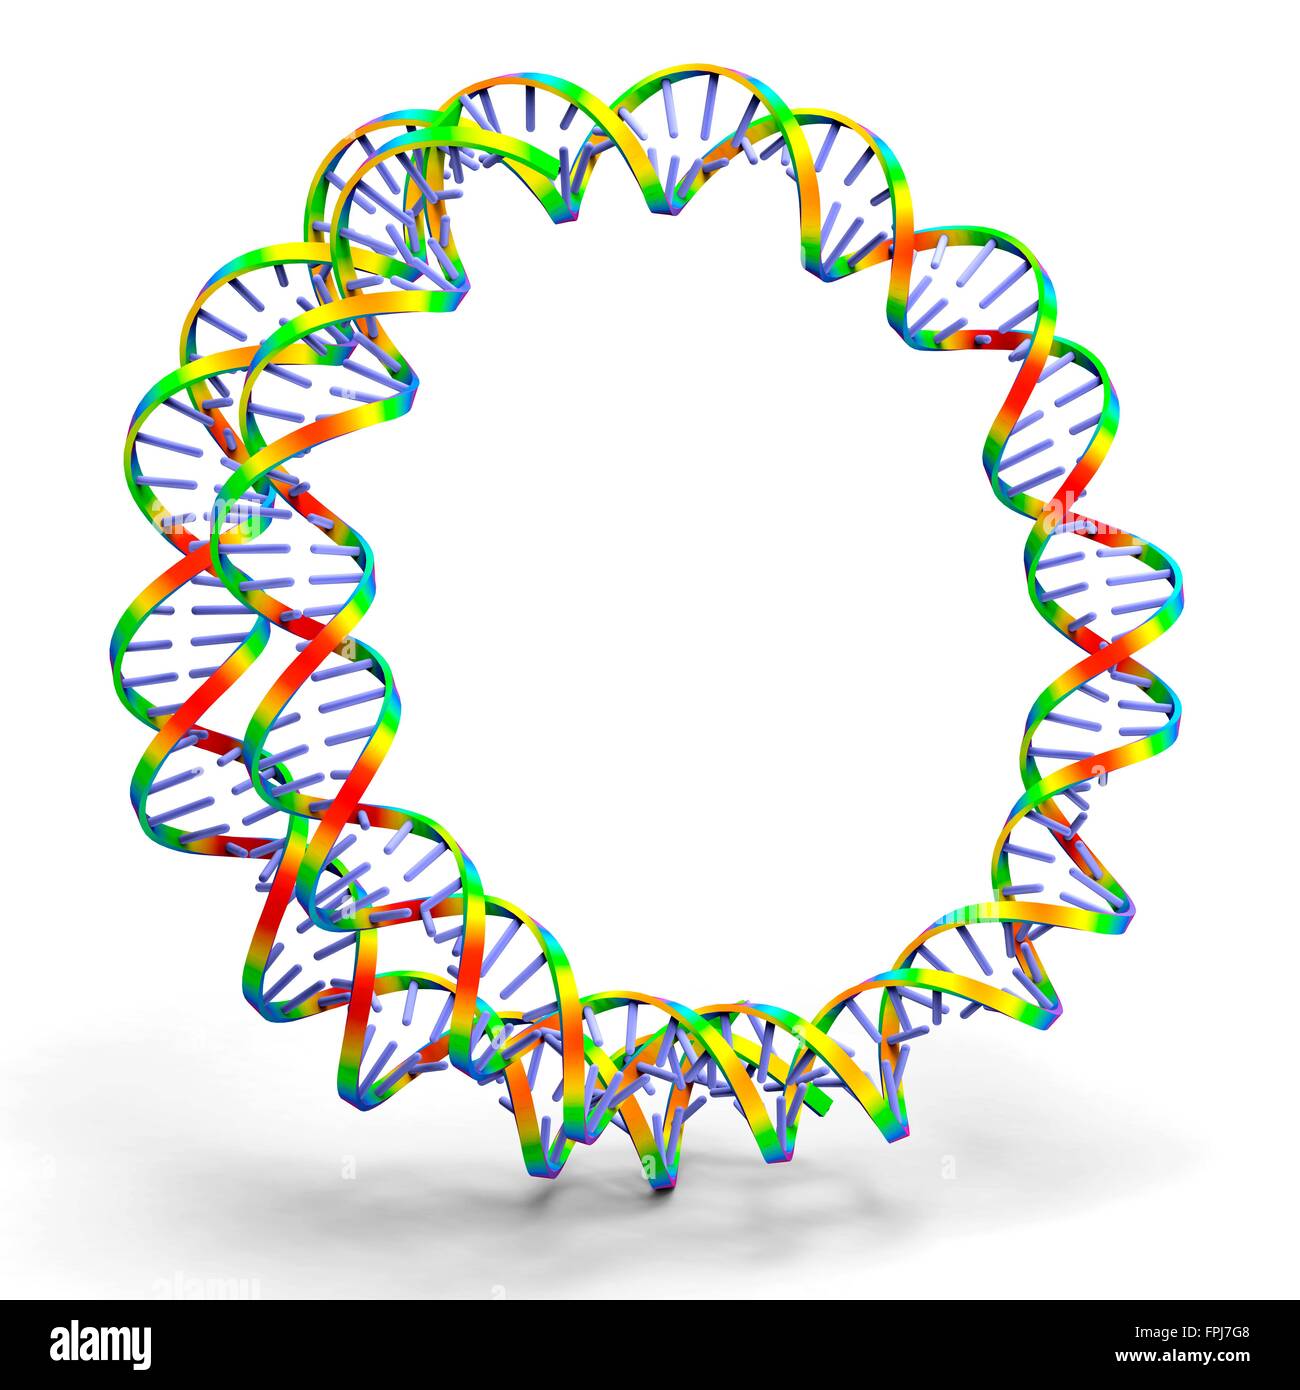 Kreisförmige DNA (Desoxyribonukleinsäure) Molekül, Computer-Grafik. Stockfoto